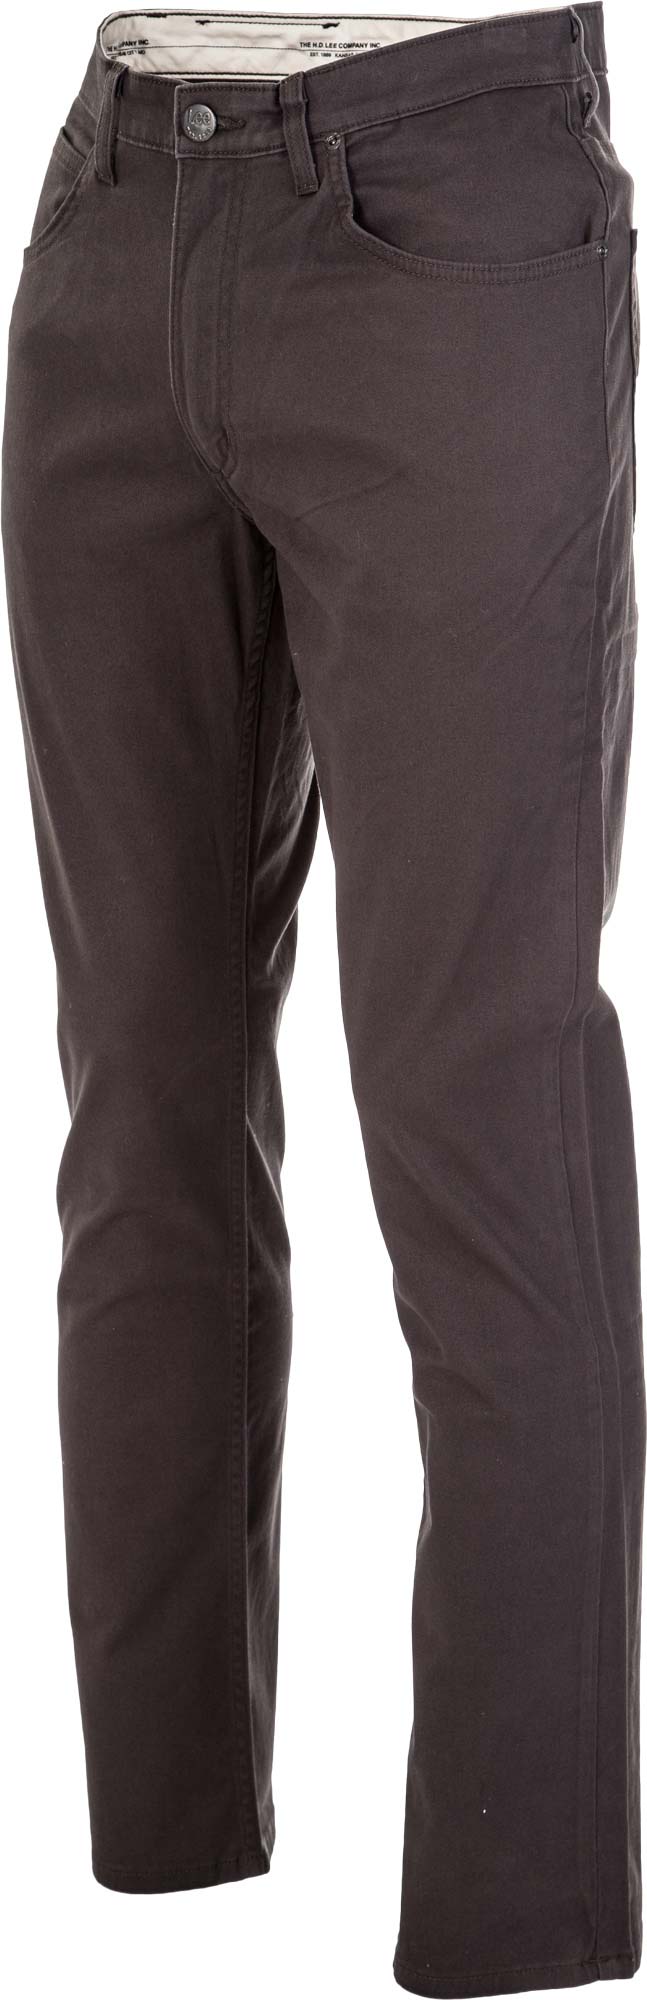 BROOKLYN STRAIGHT PIRATE BLACK - Pánské kalhoty